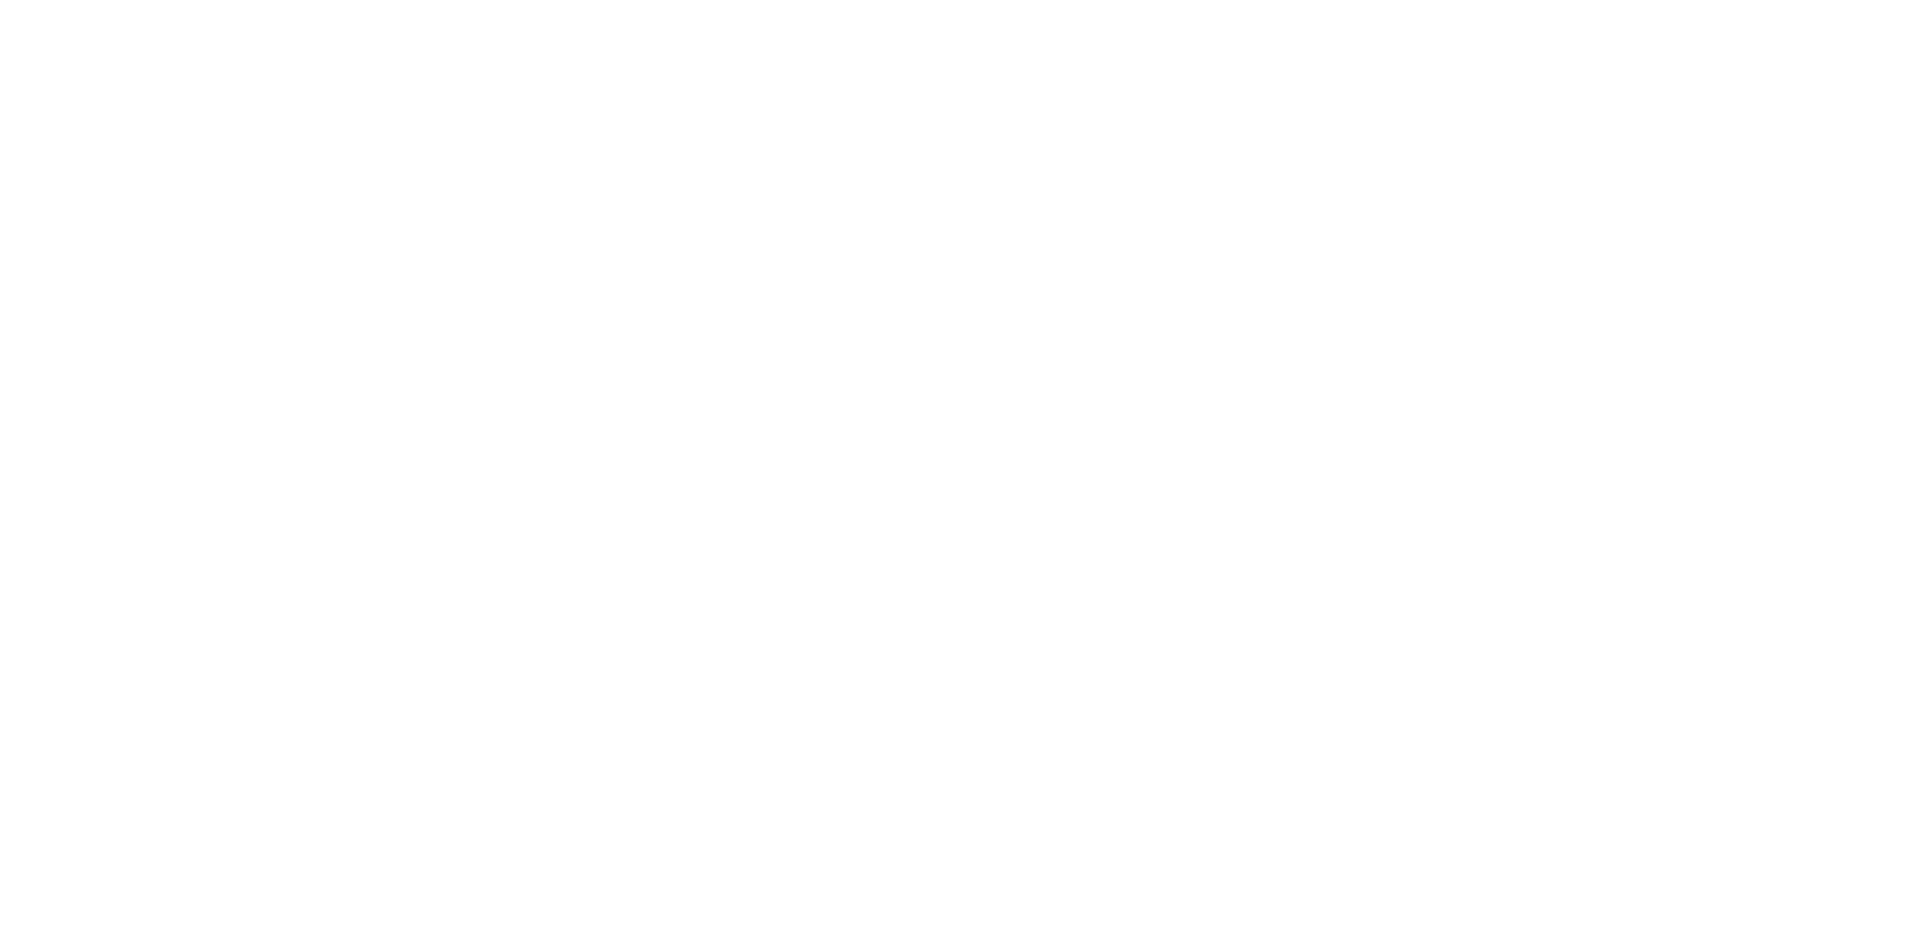 Mäusebussard - Acryl auf Leinwand, 120 x 60 cm